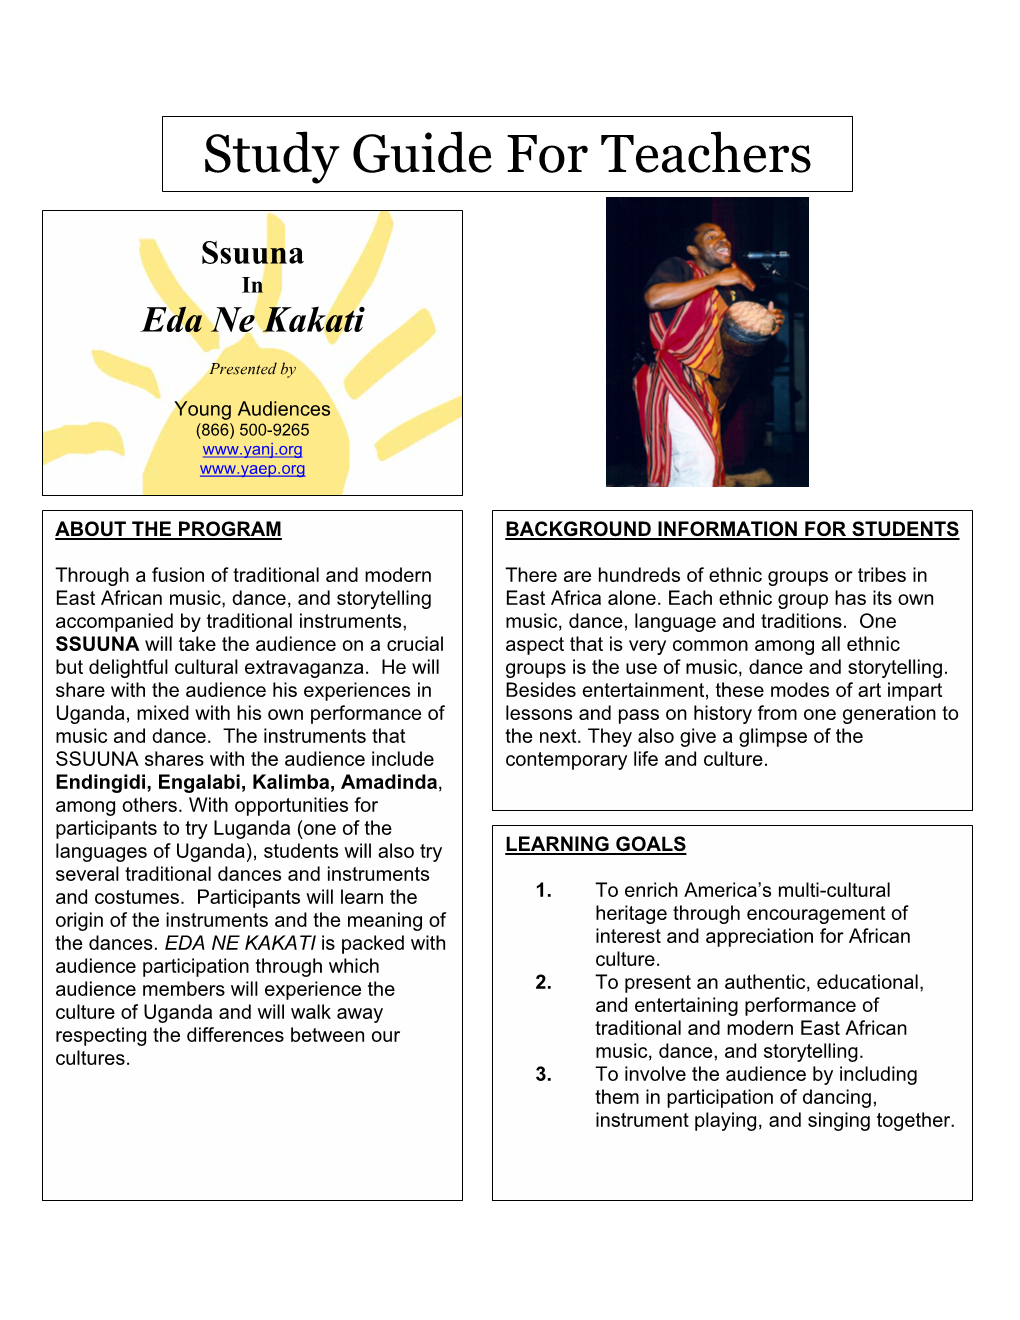 Study Guide for Teachers